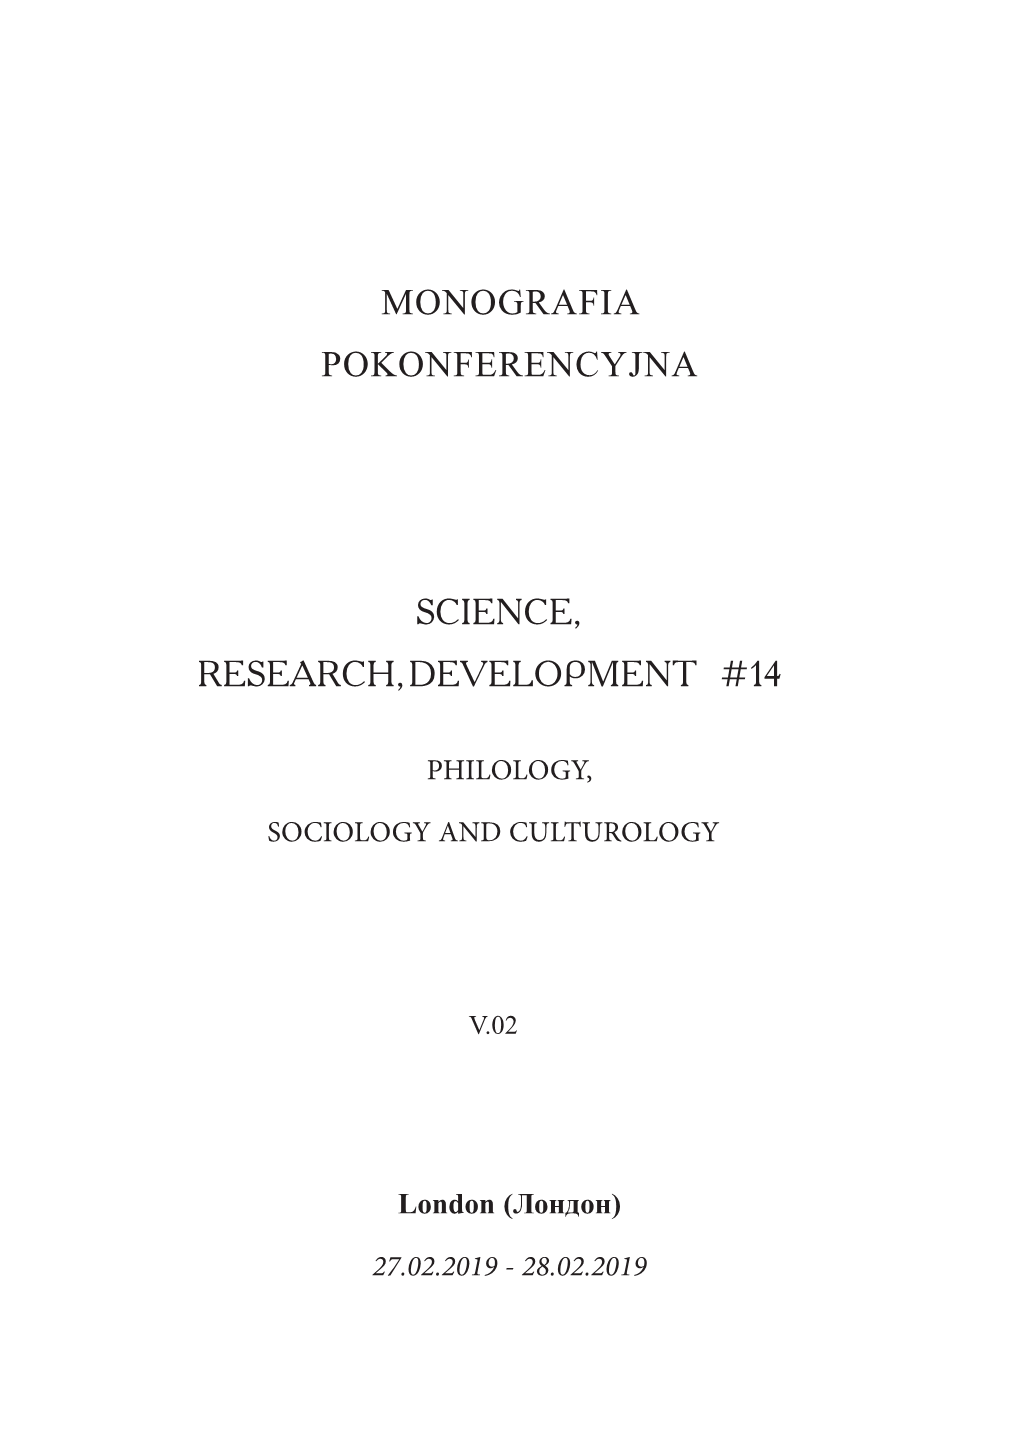 Monografia Pokonferencyjna Science, Research